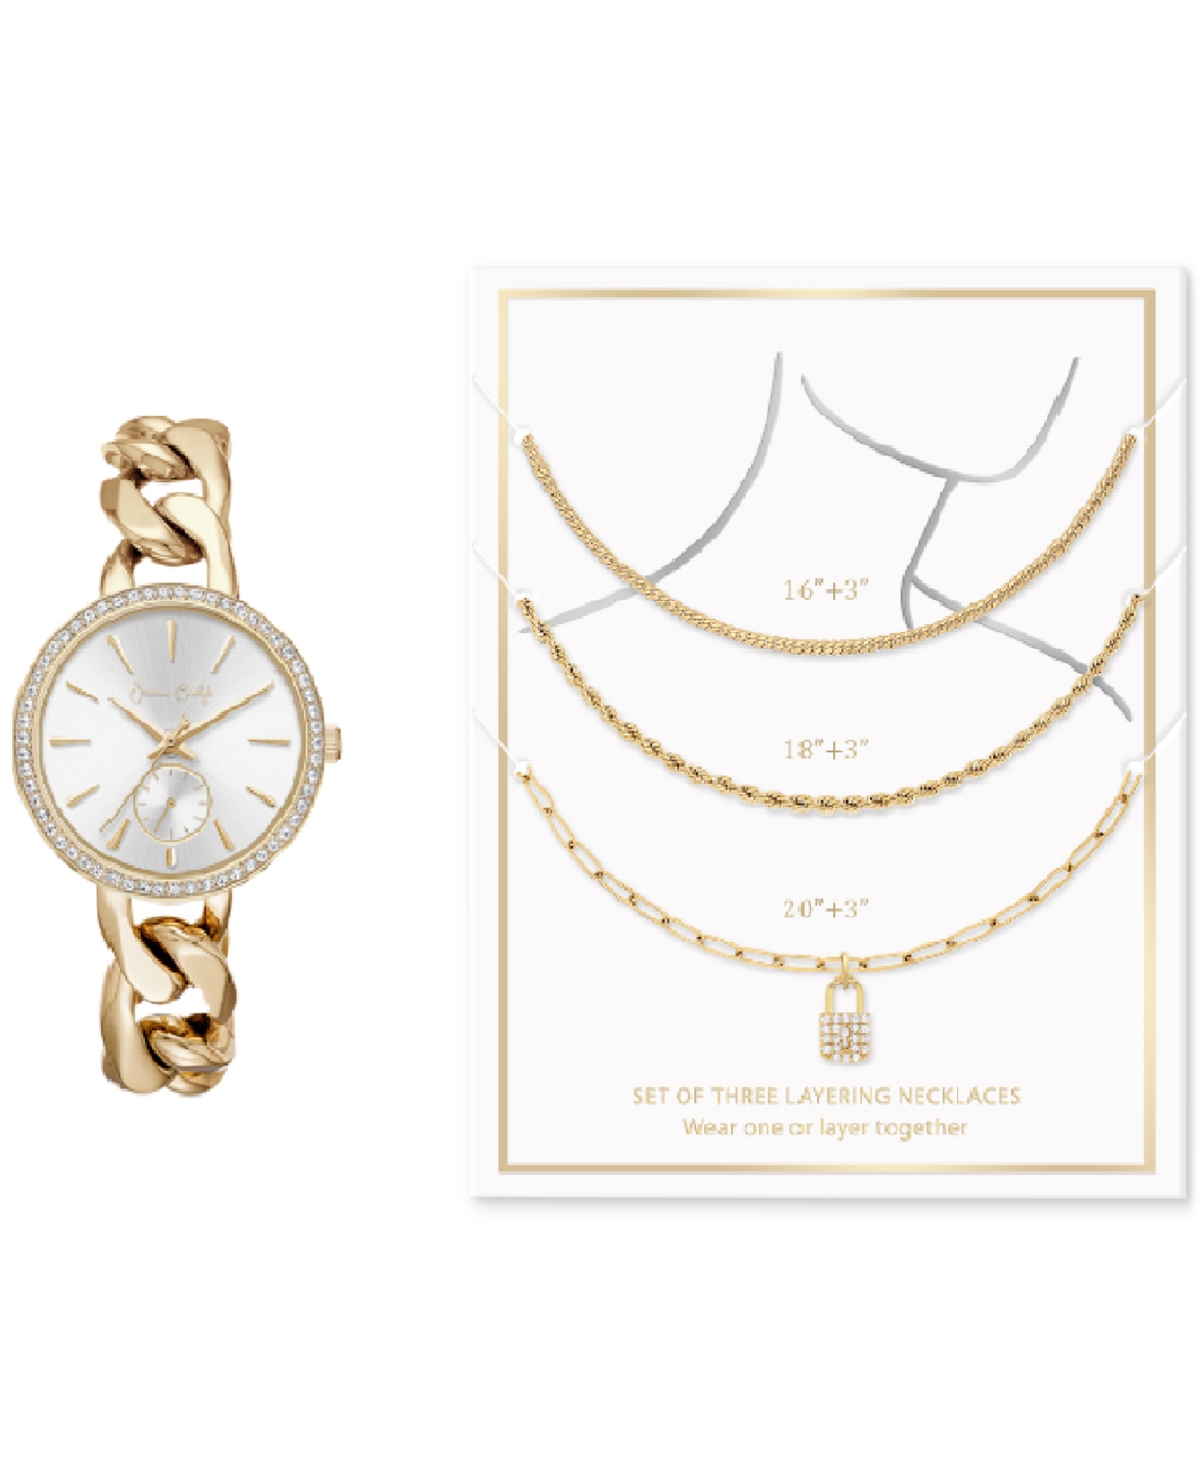 Women's Gold-Tone Bracelet Watch 34mm & 3-Pc. Necklace Gift Set - Gold